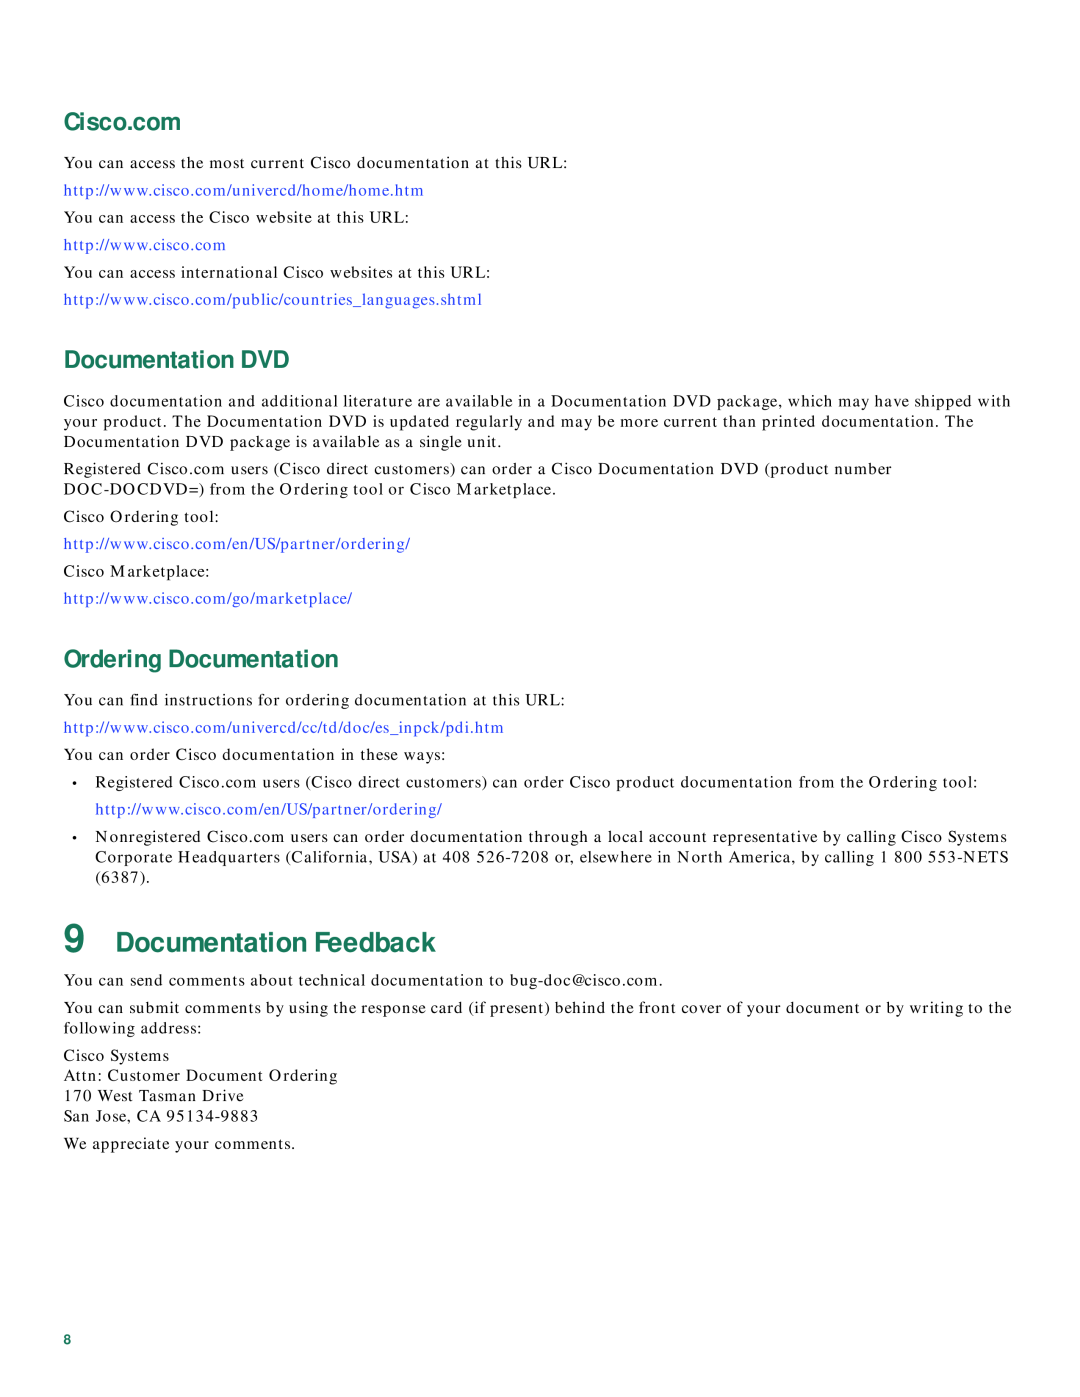 Cisco Systems 1712, 1711 quick start Documentation Feedback, Cisco.com, Documentation DVD, Ordering Documentation 